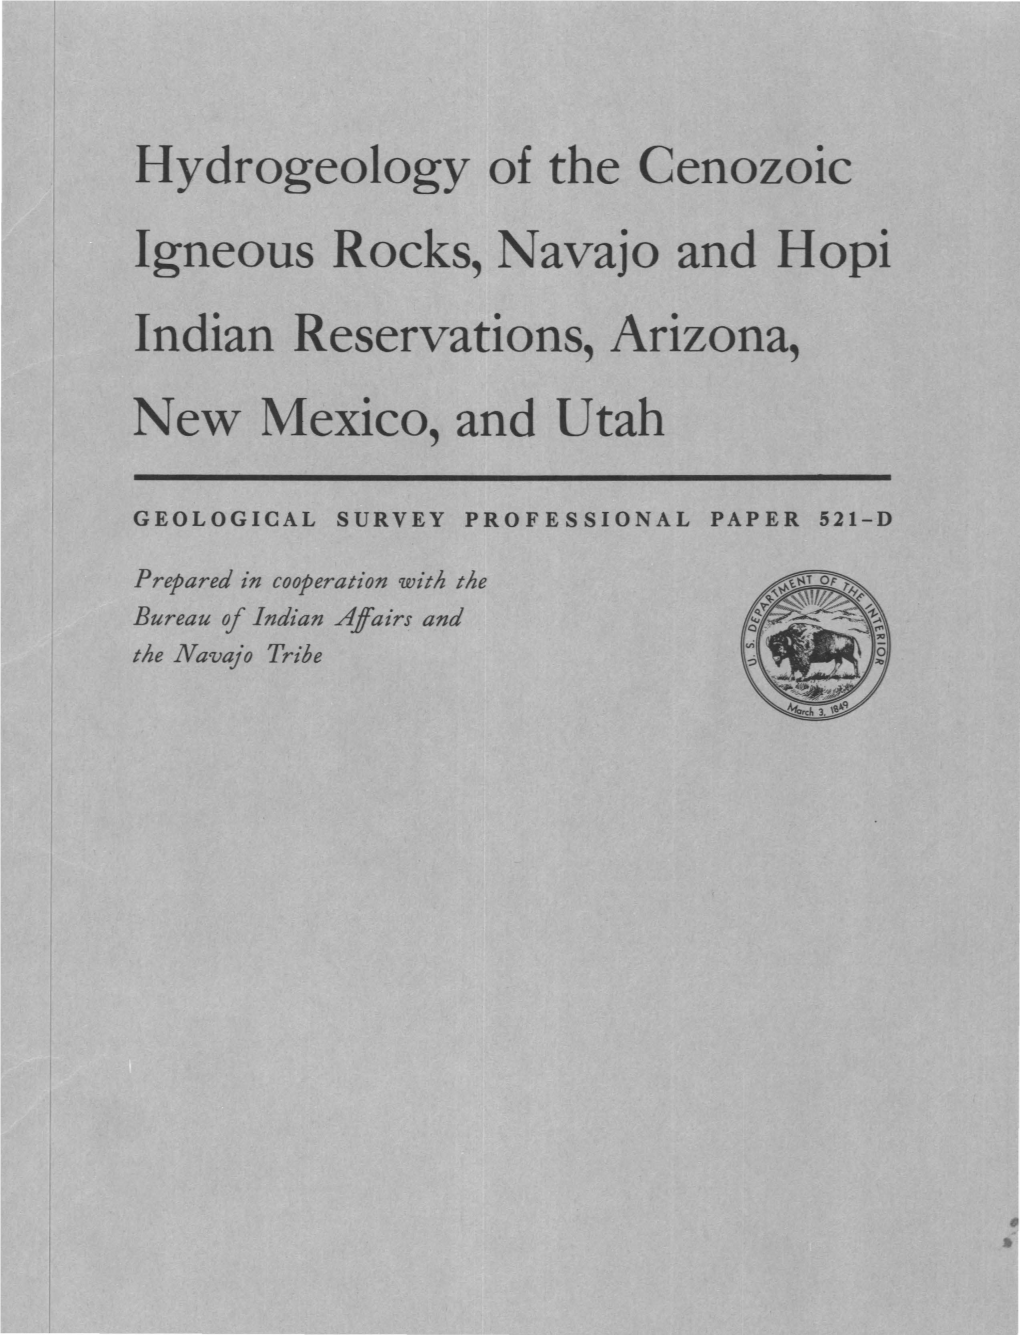 Hydrogeology of the Cenozoic Igneous Rocks, Navajo and Hopi Indian Reservations, Arizona, New Mexico, and Utah